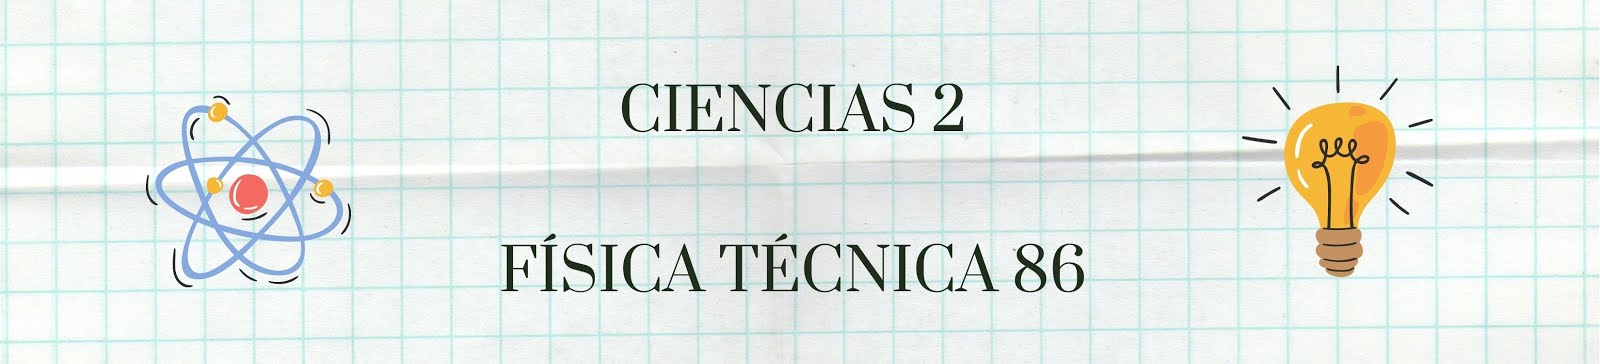 Ciencias 2: Física Técnica 86